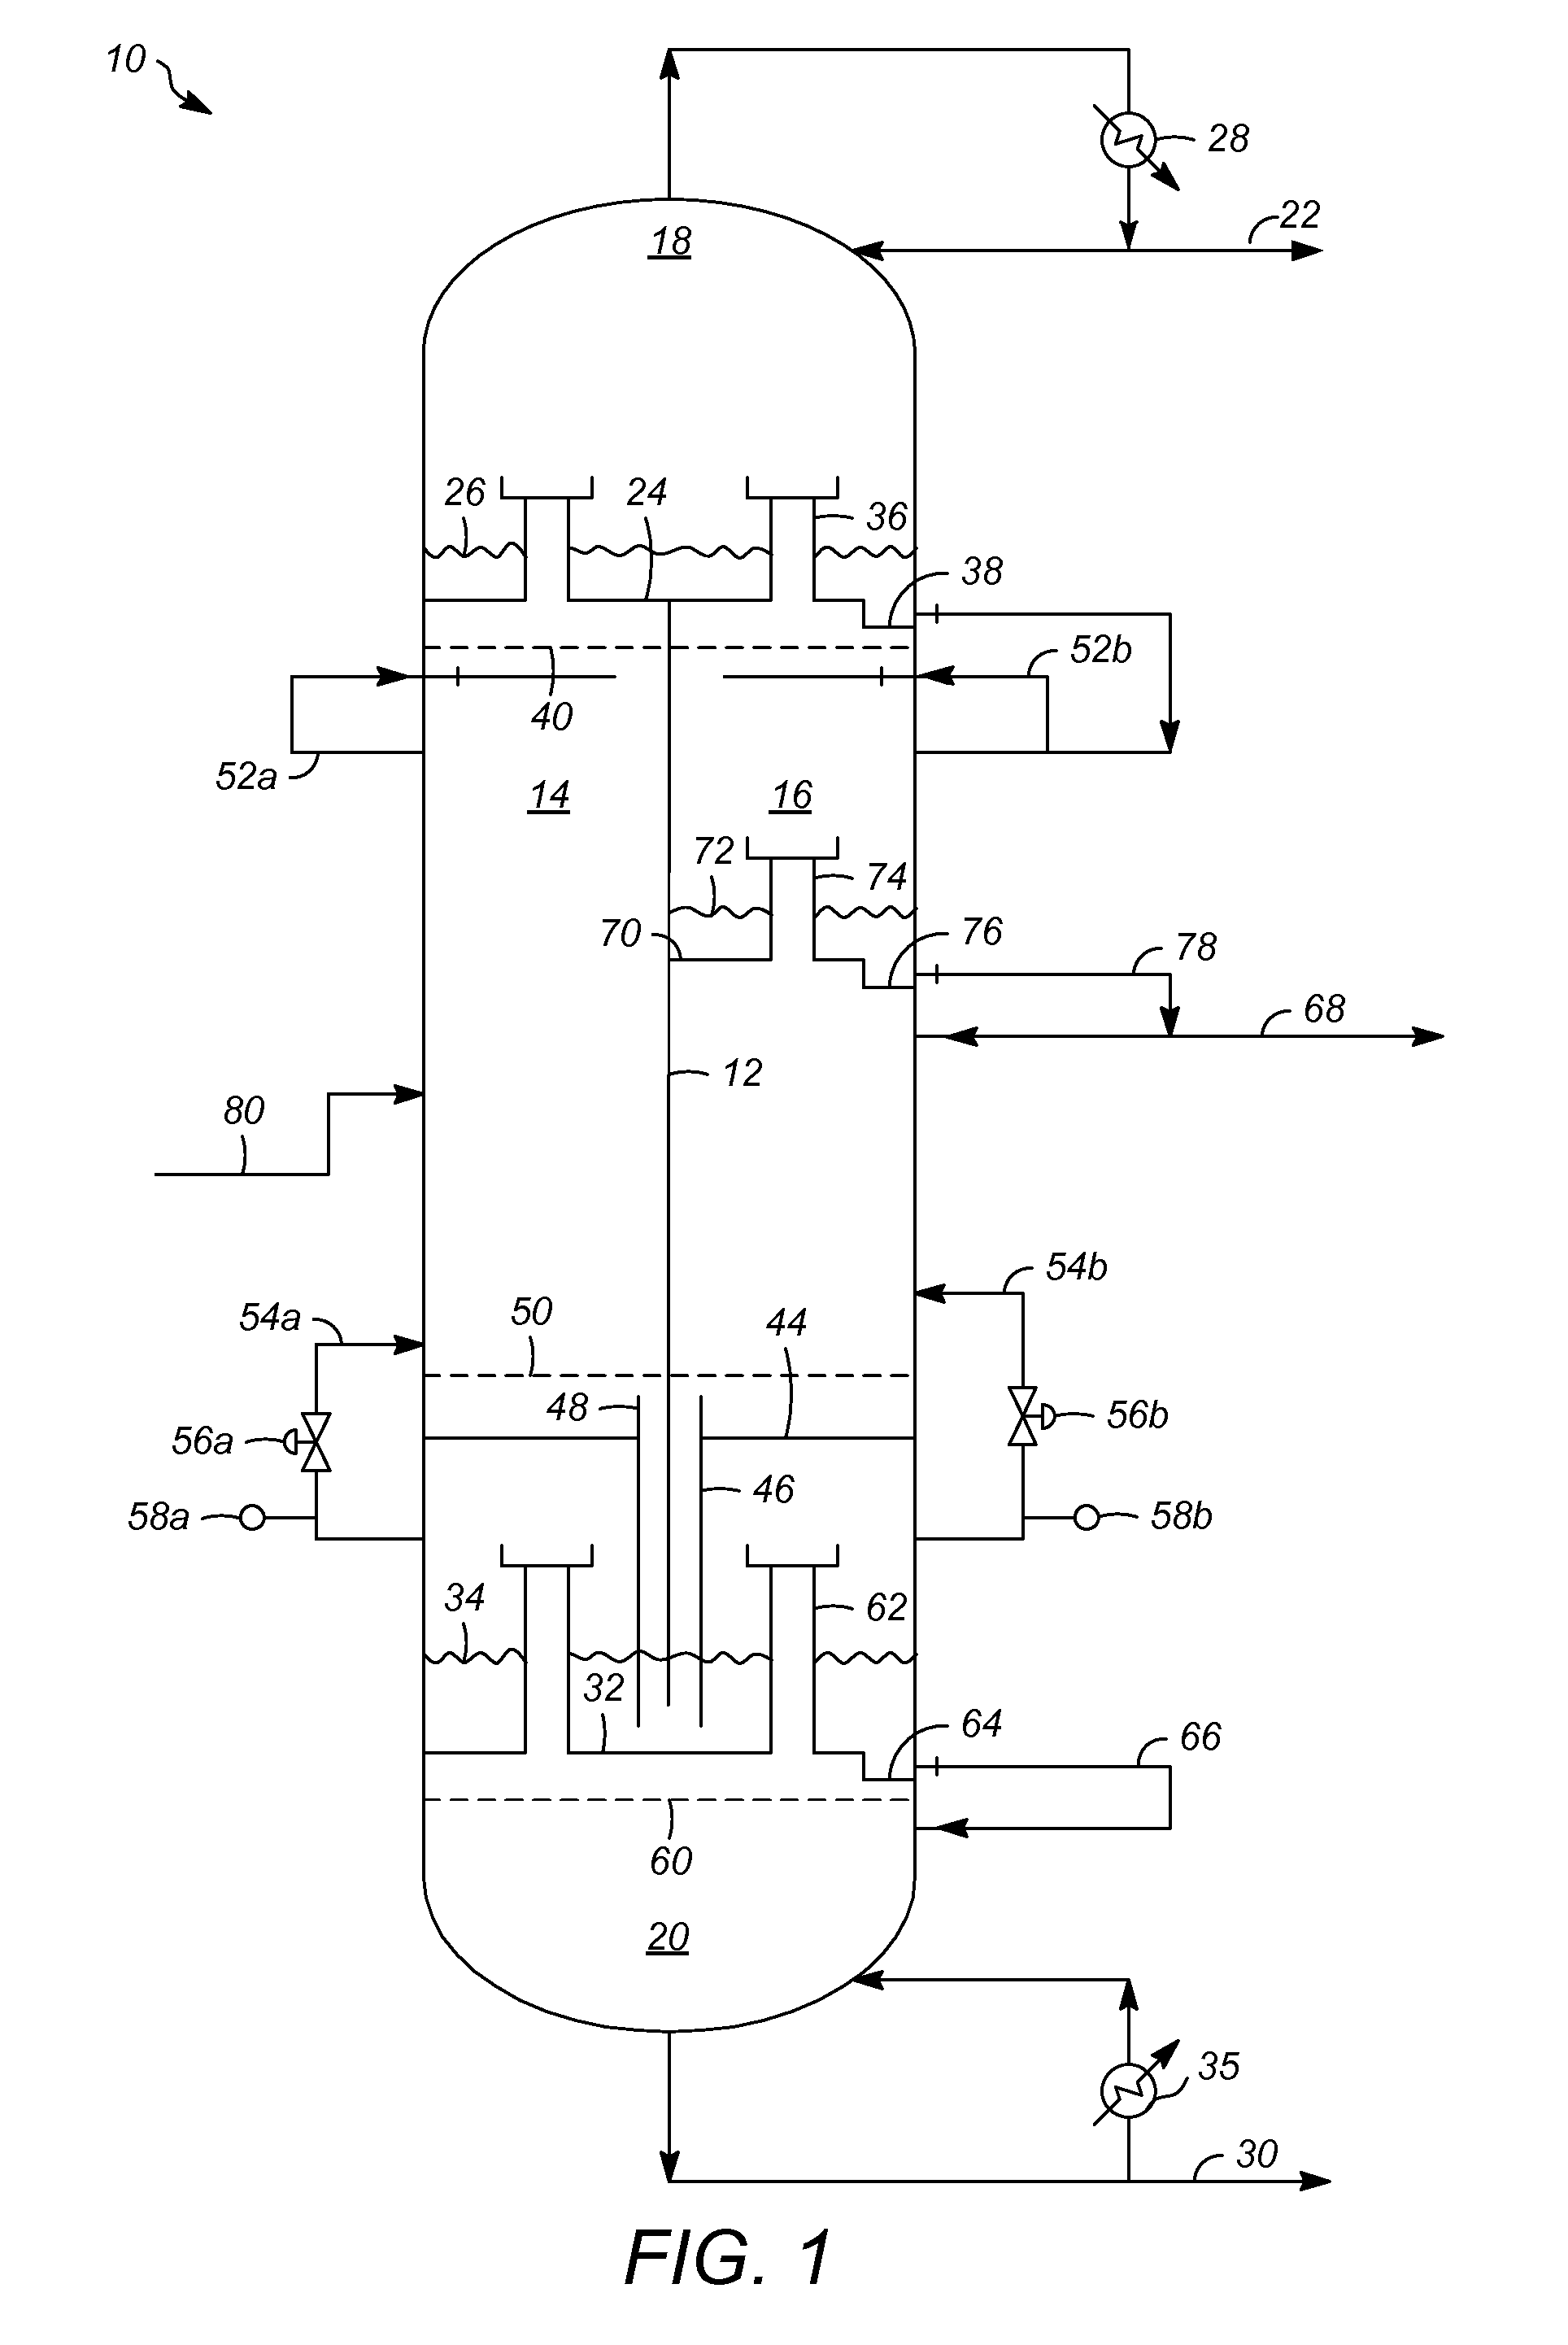 Vapor and liquid flow control in a dividing wall fractional distillation column